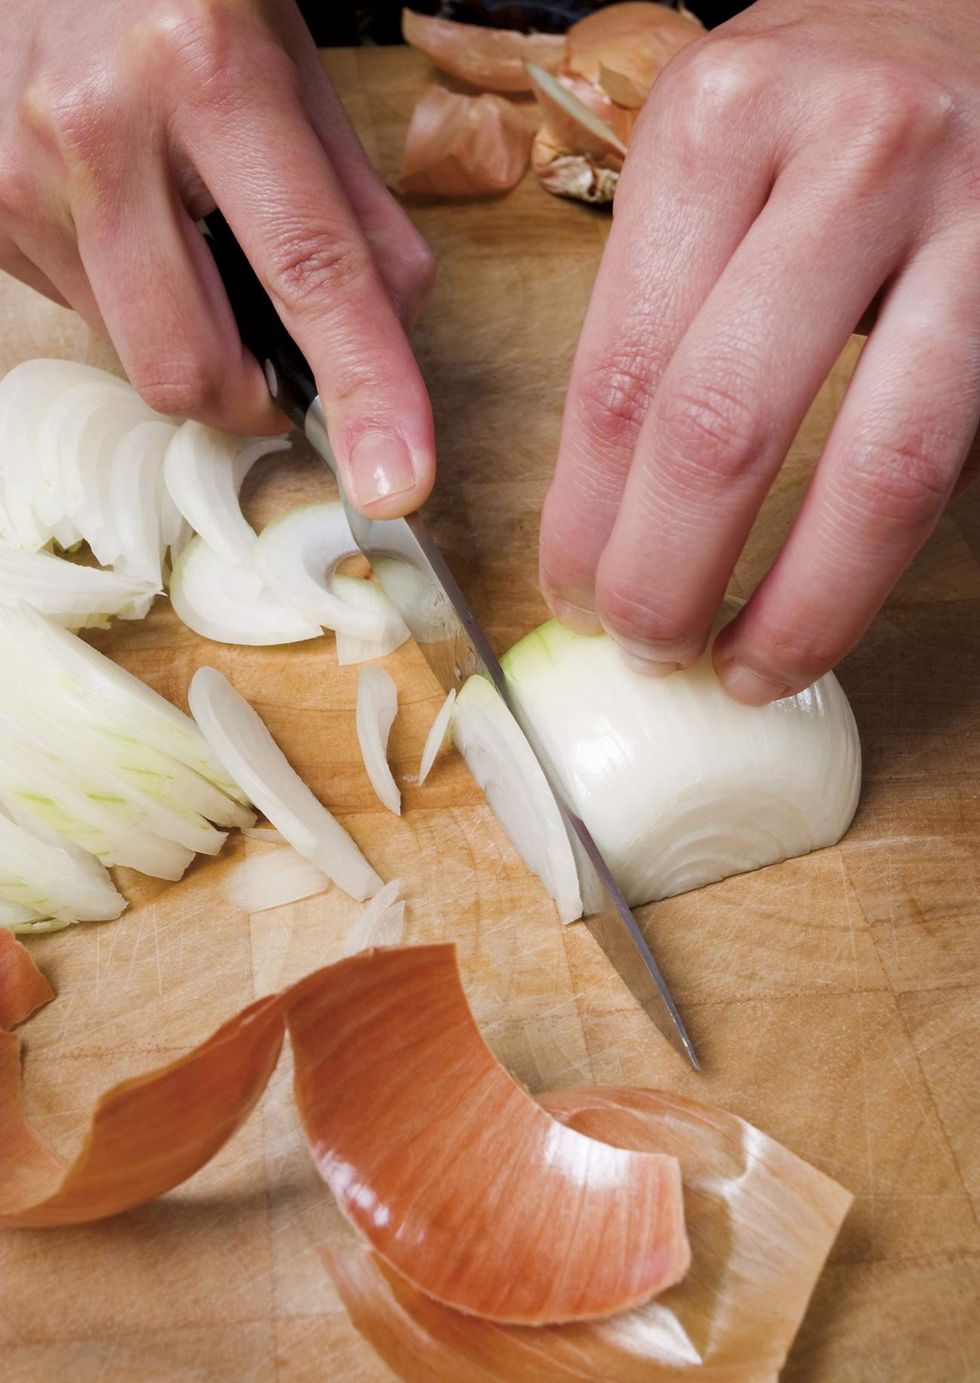 9 técnicas básicas para cortar verduras que todo cocinero debería sabe